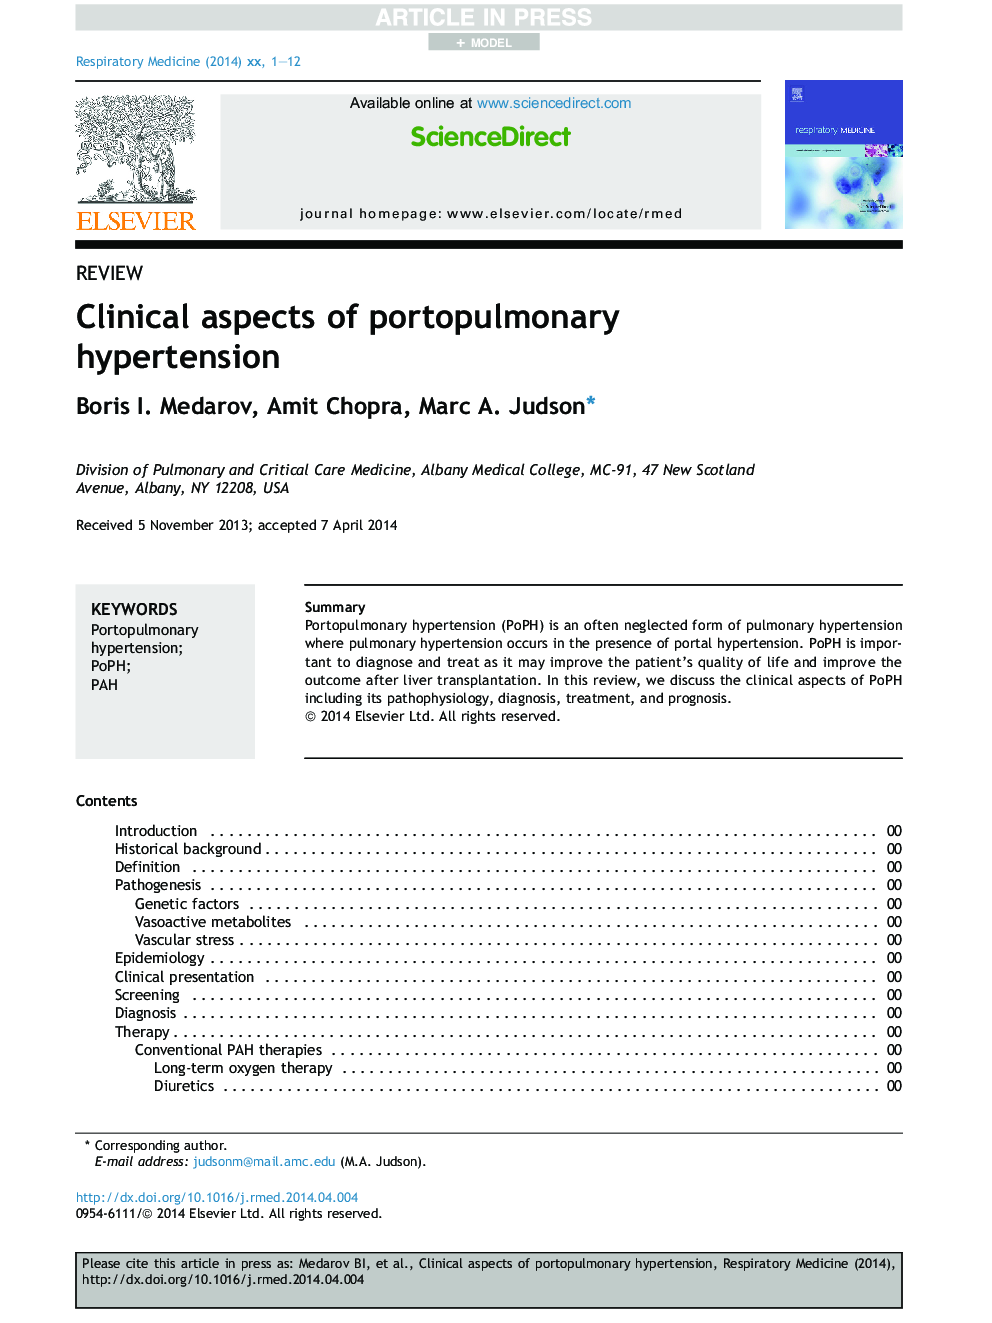 Clinical aspects of portopulmonary hypertension